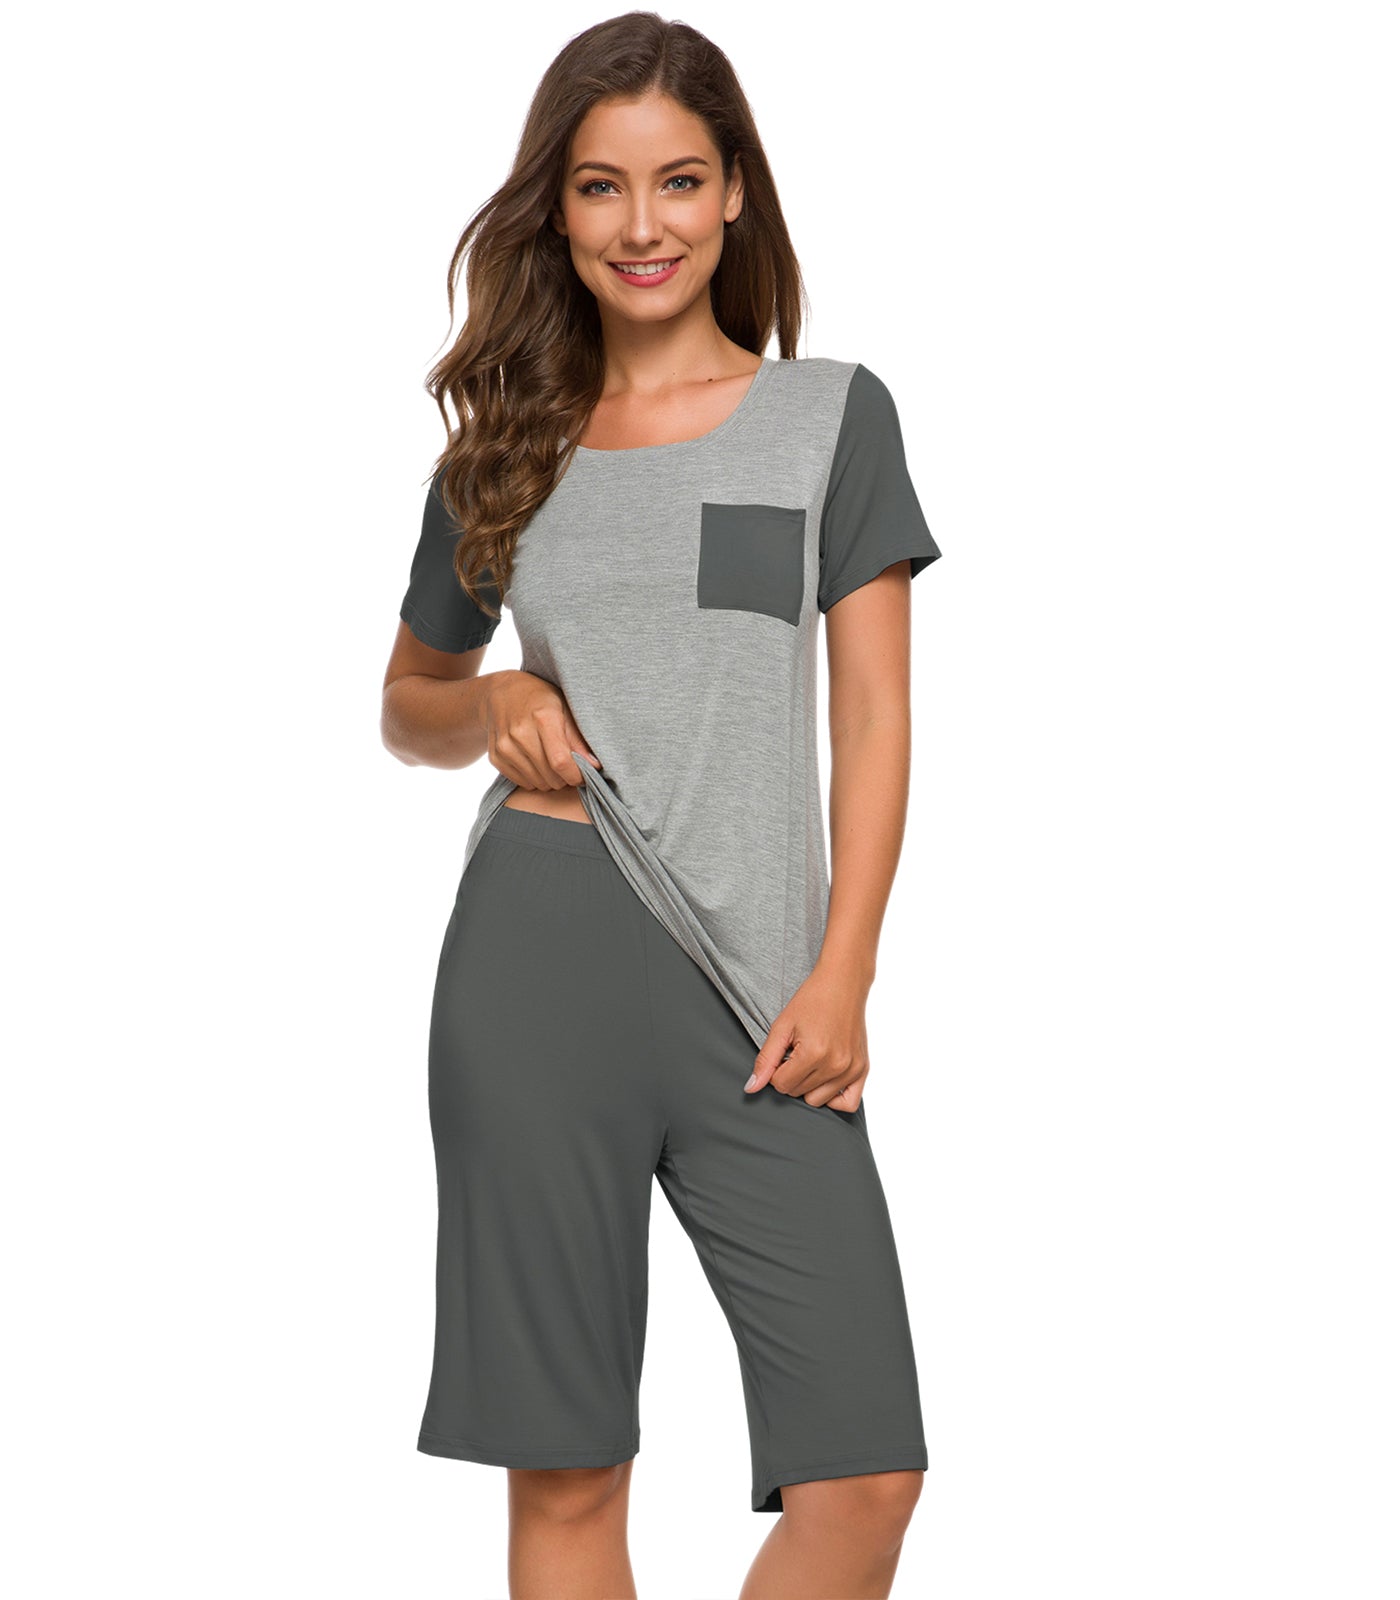 WiWi Bamboo Pajamas for Women Soft Pajama Sets Short Sleeves Top